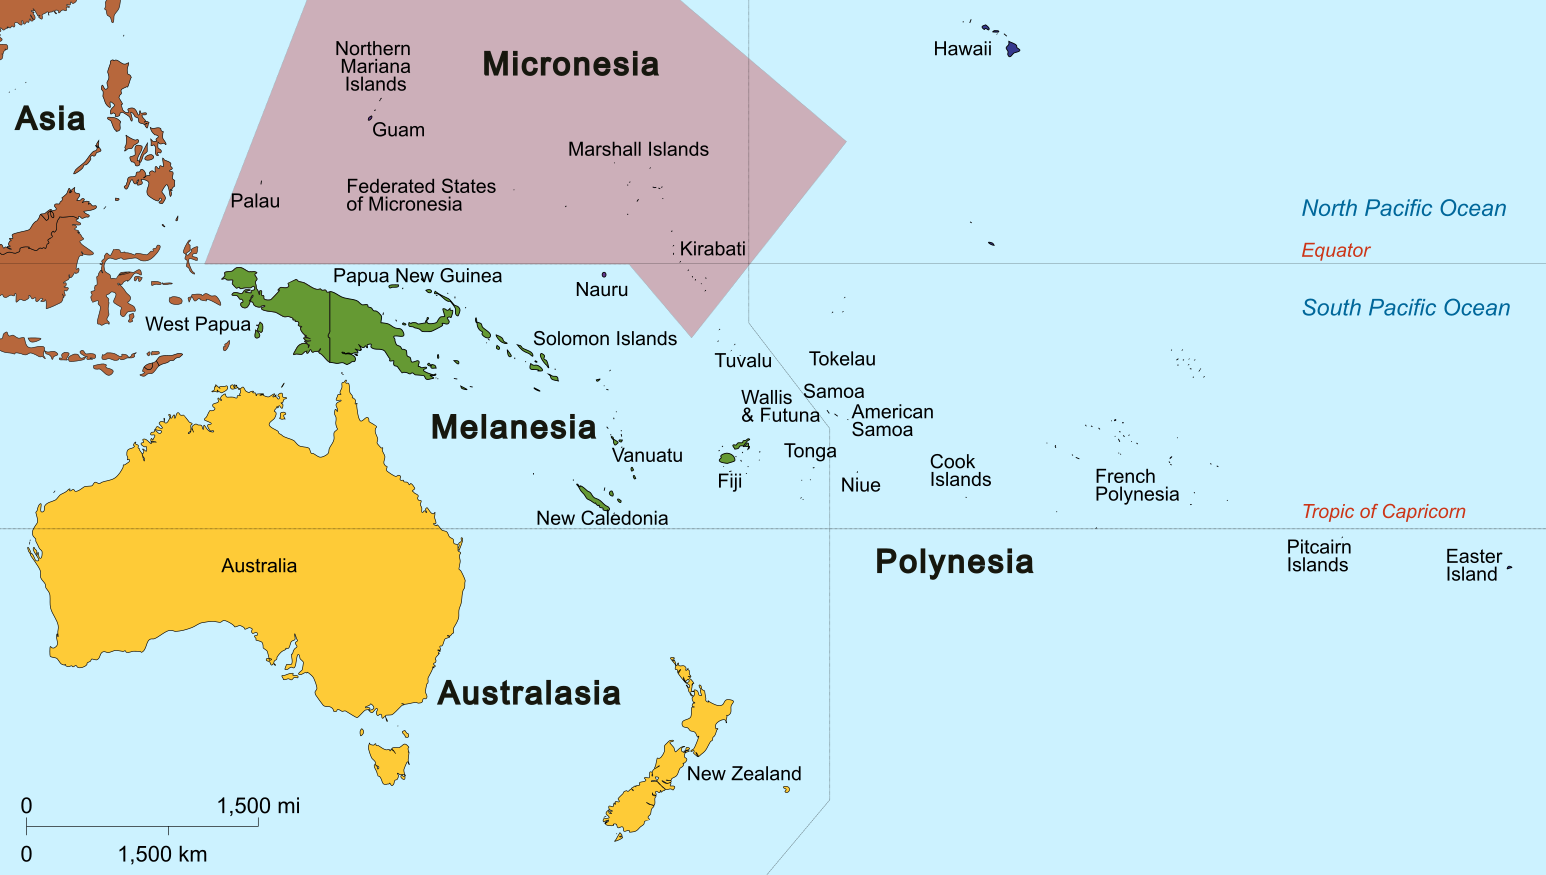 Oceania UN Geoscheme - Map of Micronesia, Melanesia, and Polynesia.